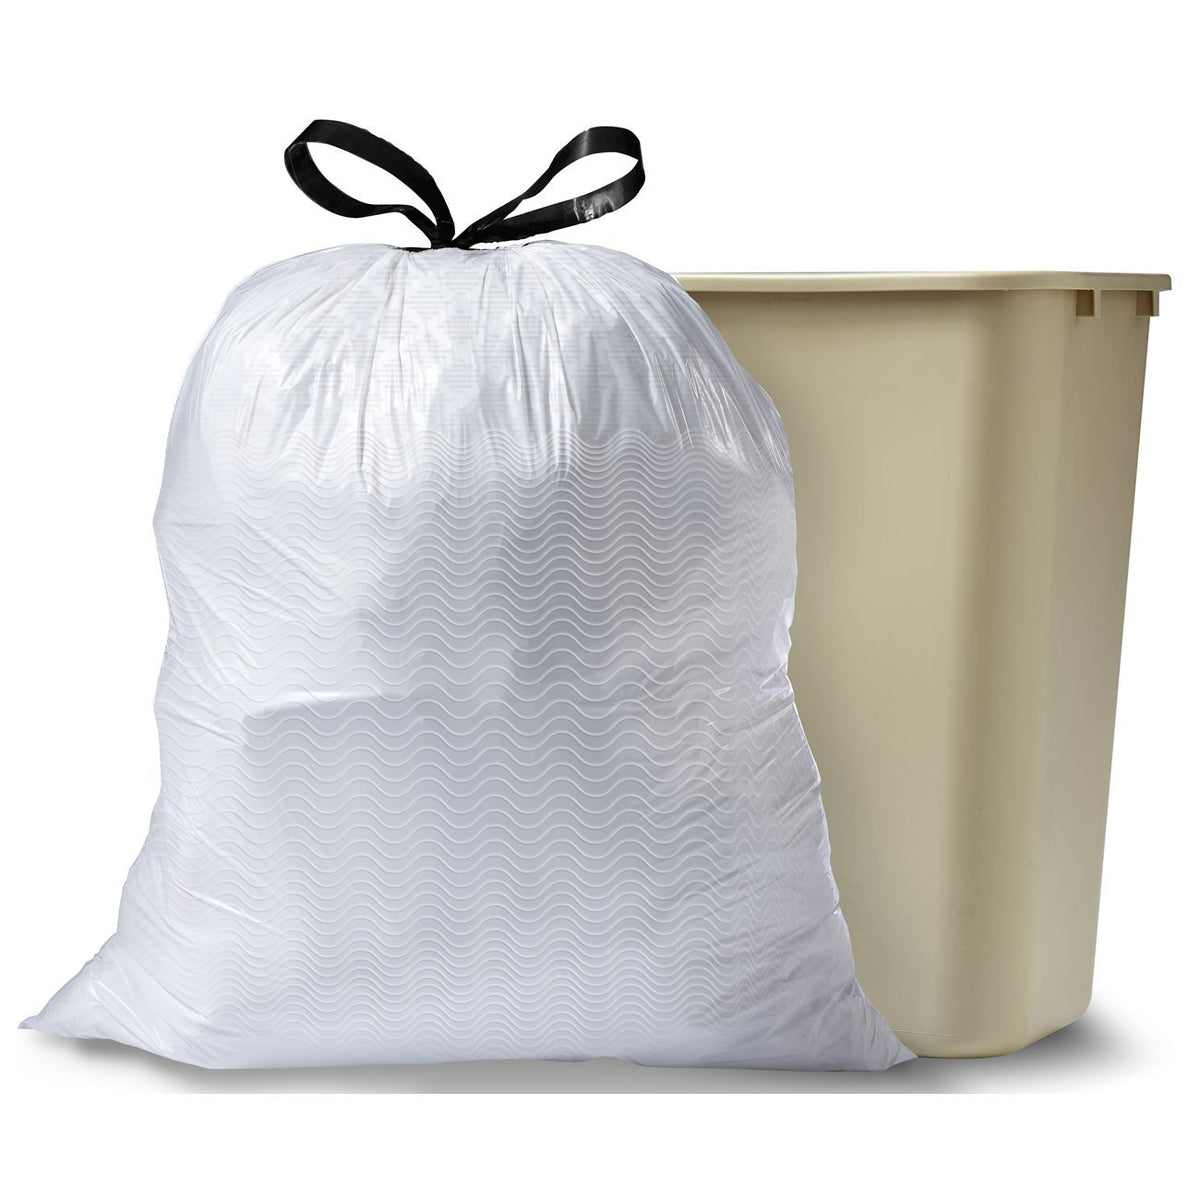 Glad ForceFlexPlus Tall Kitchen Drawstring Trash Bags - 13 Gallon White Trash  Bag - OdorShield